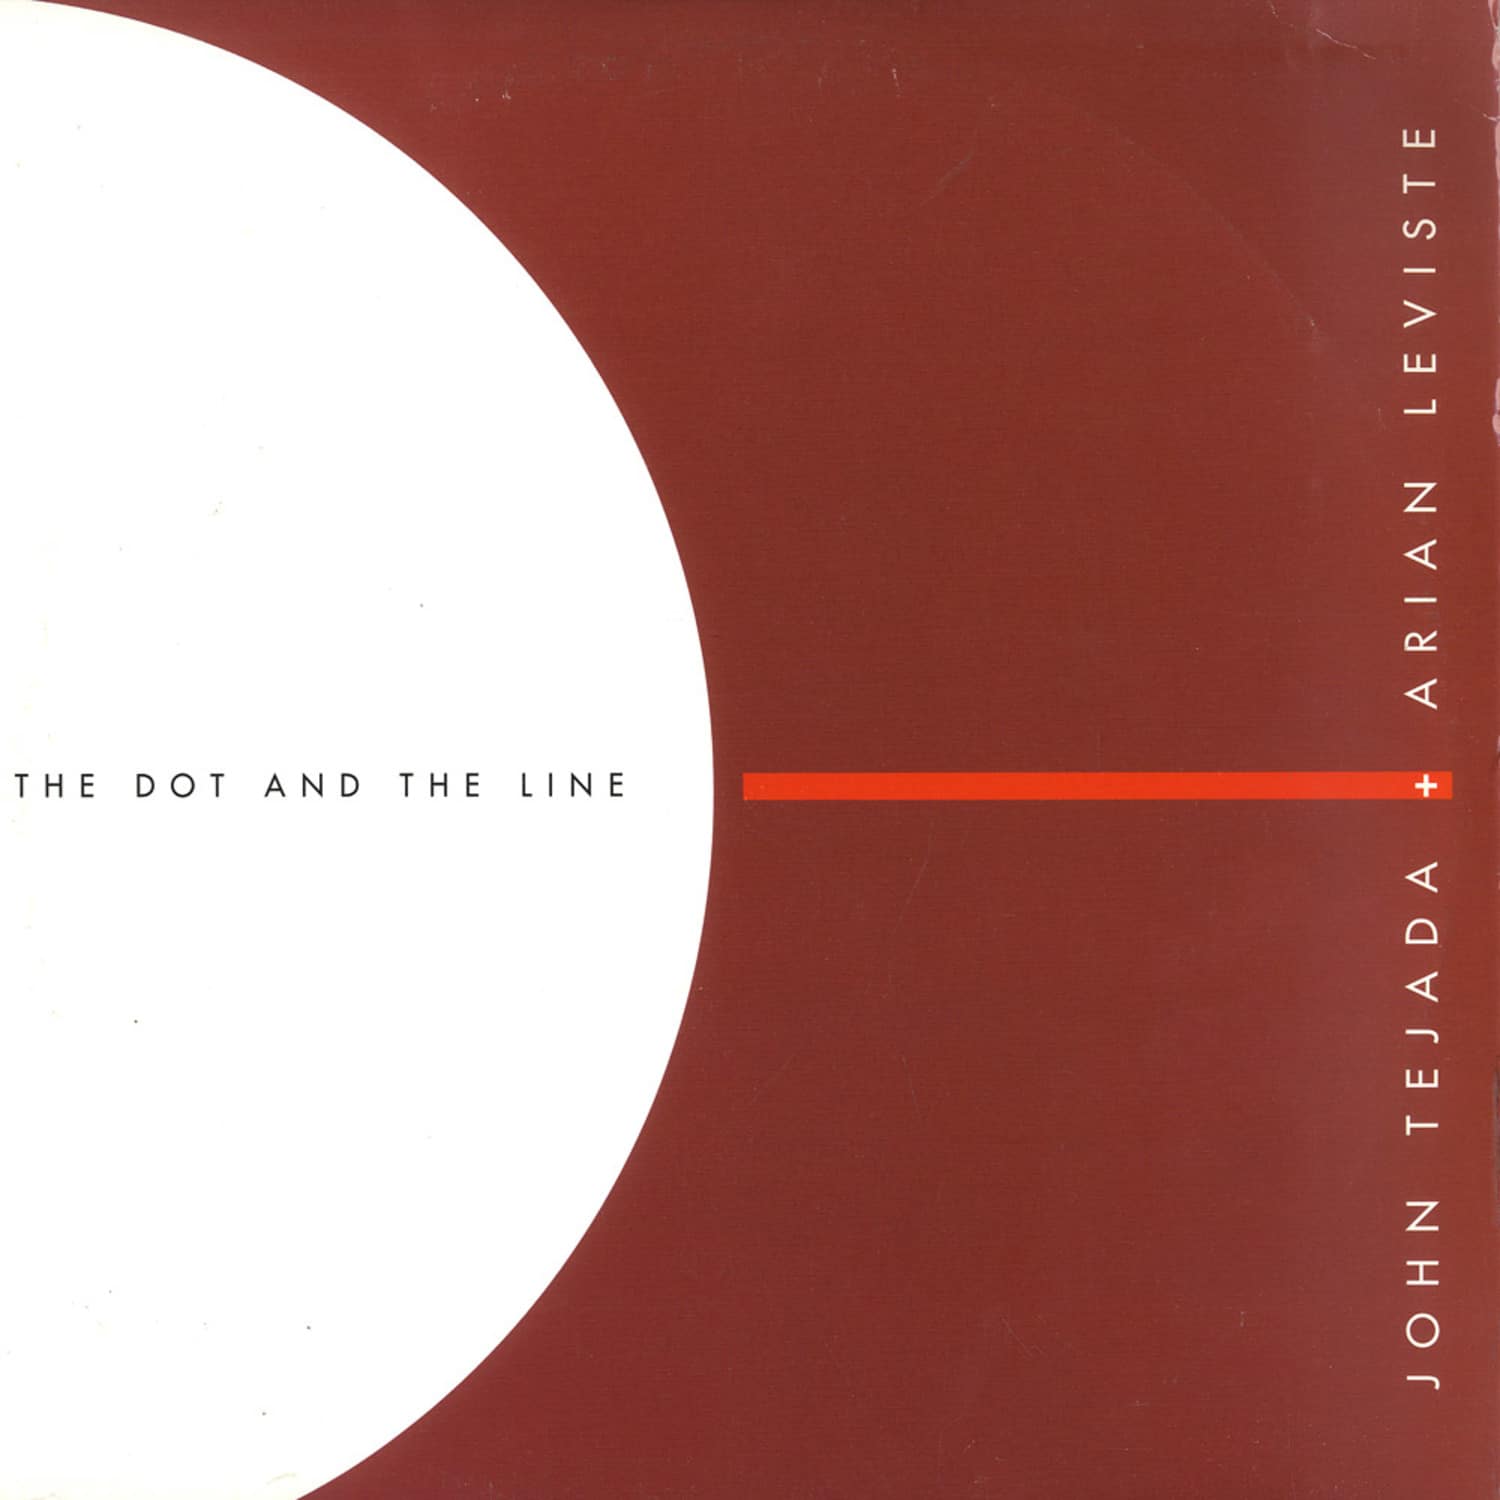 John Tejada & Arian Leviste - THE DOT AND THE LINE 